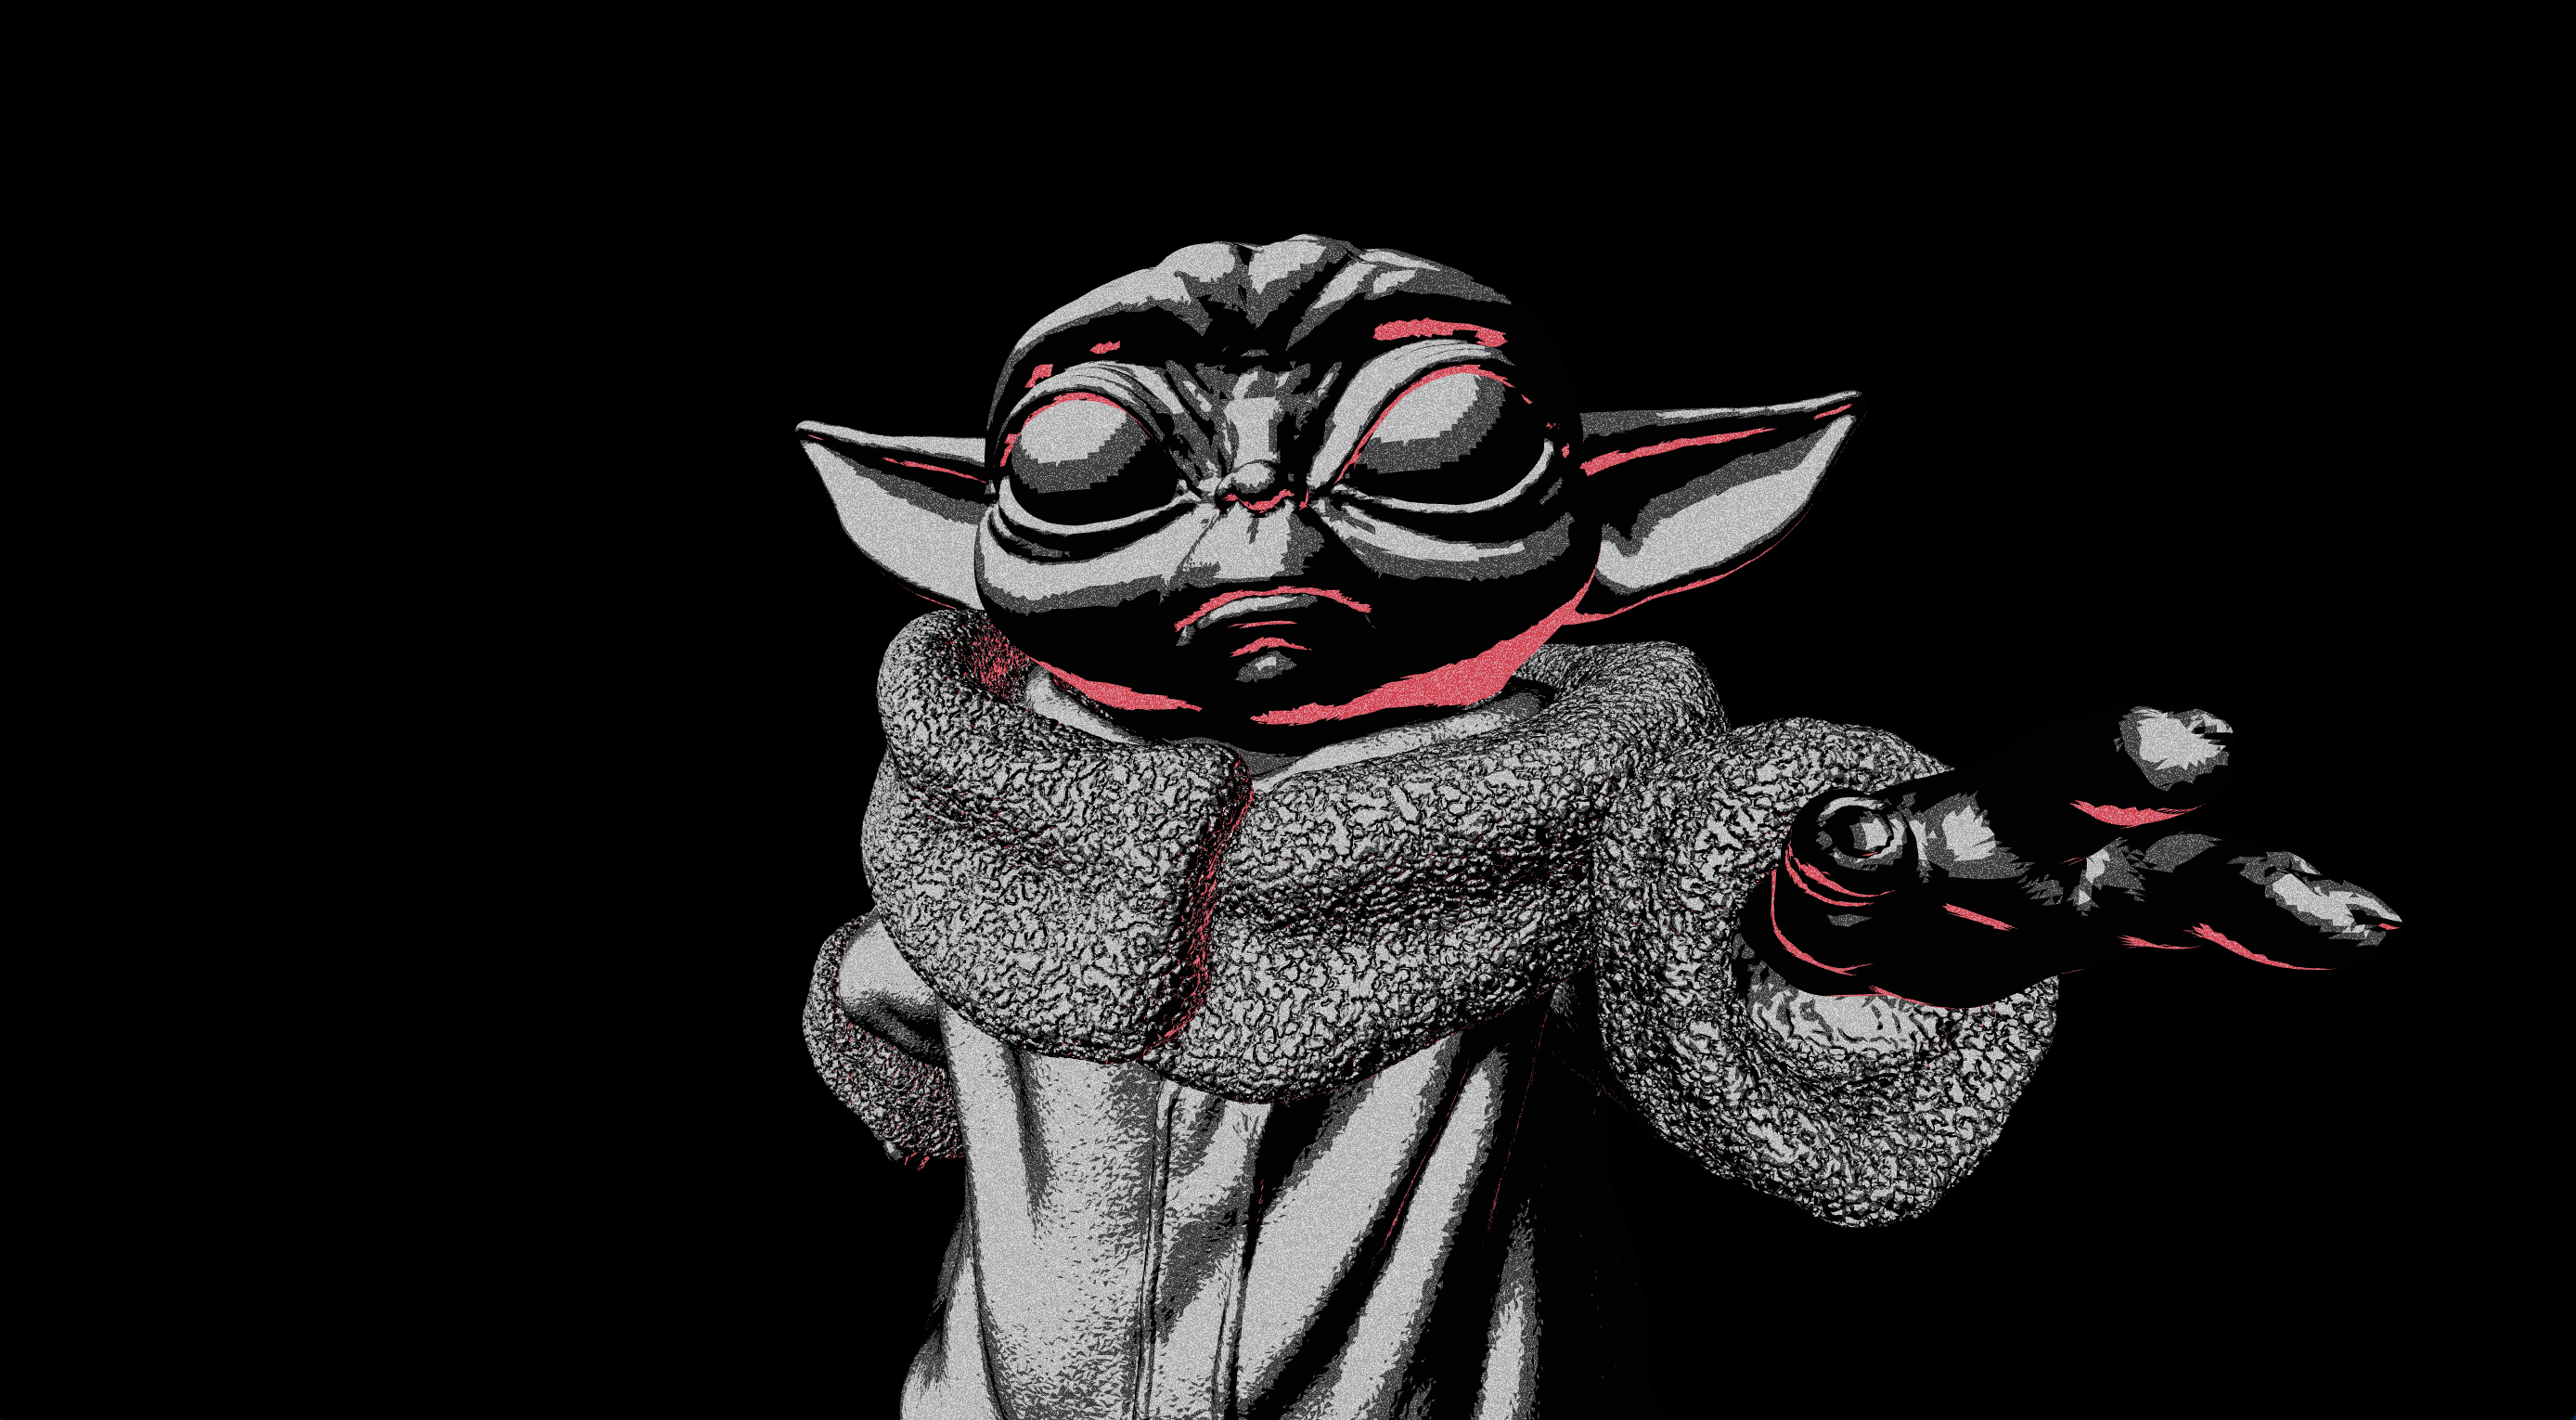 Baby Yoda model with noir shader and aliasing